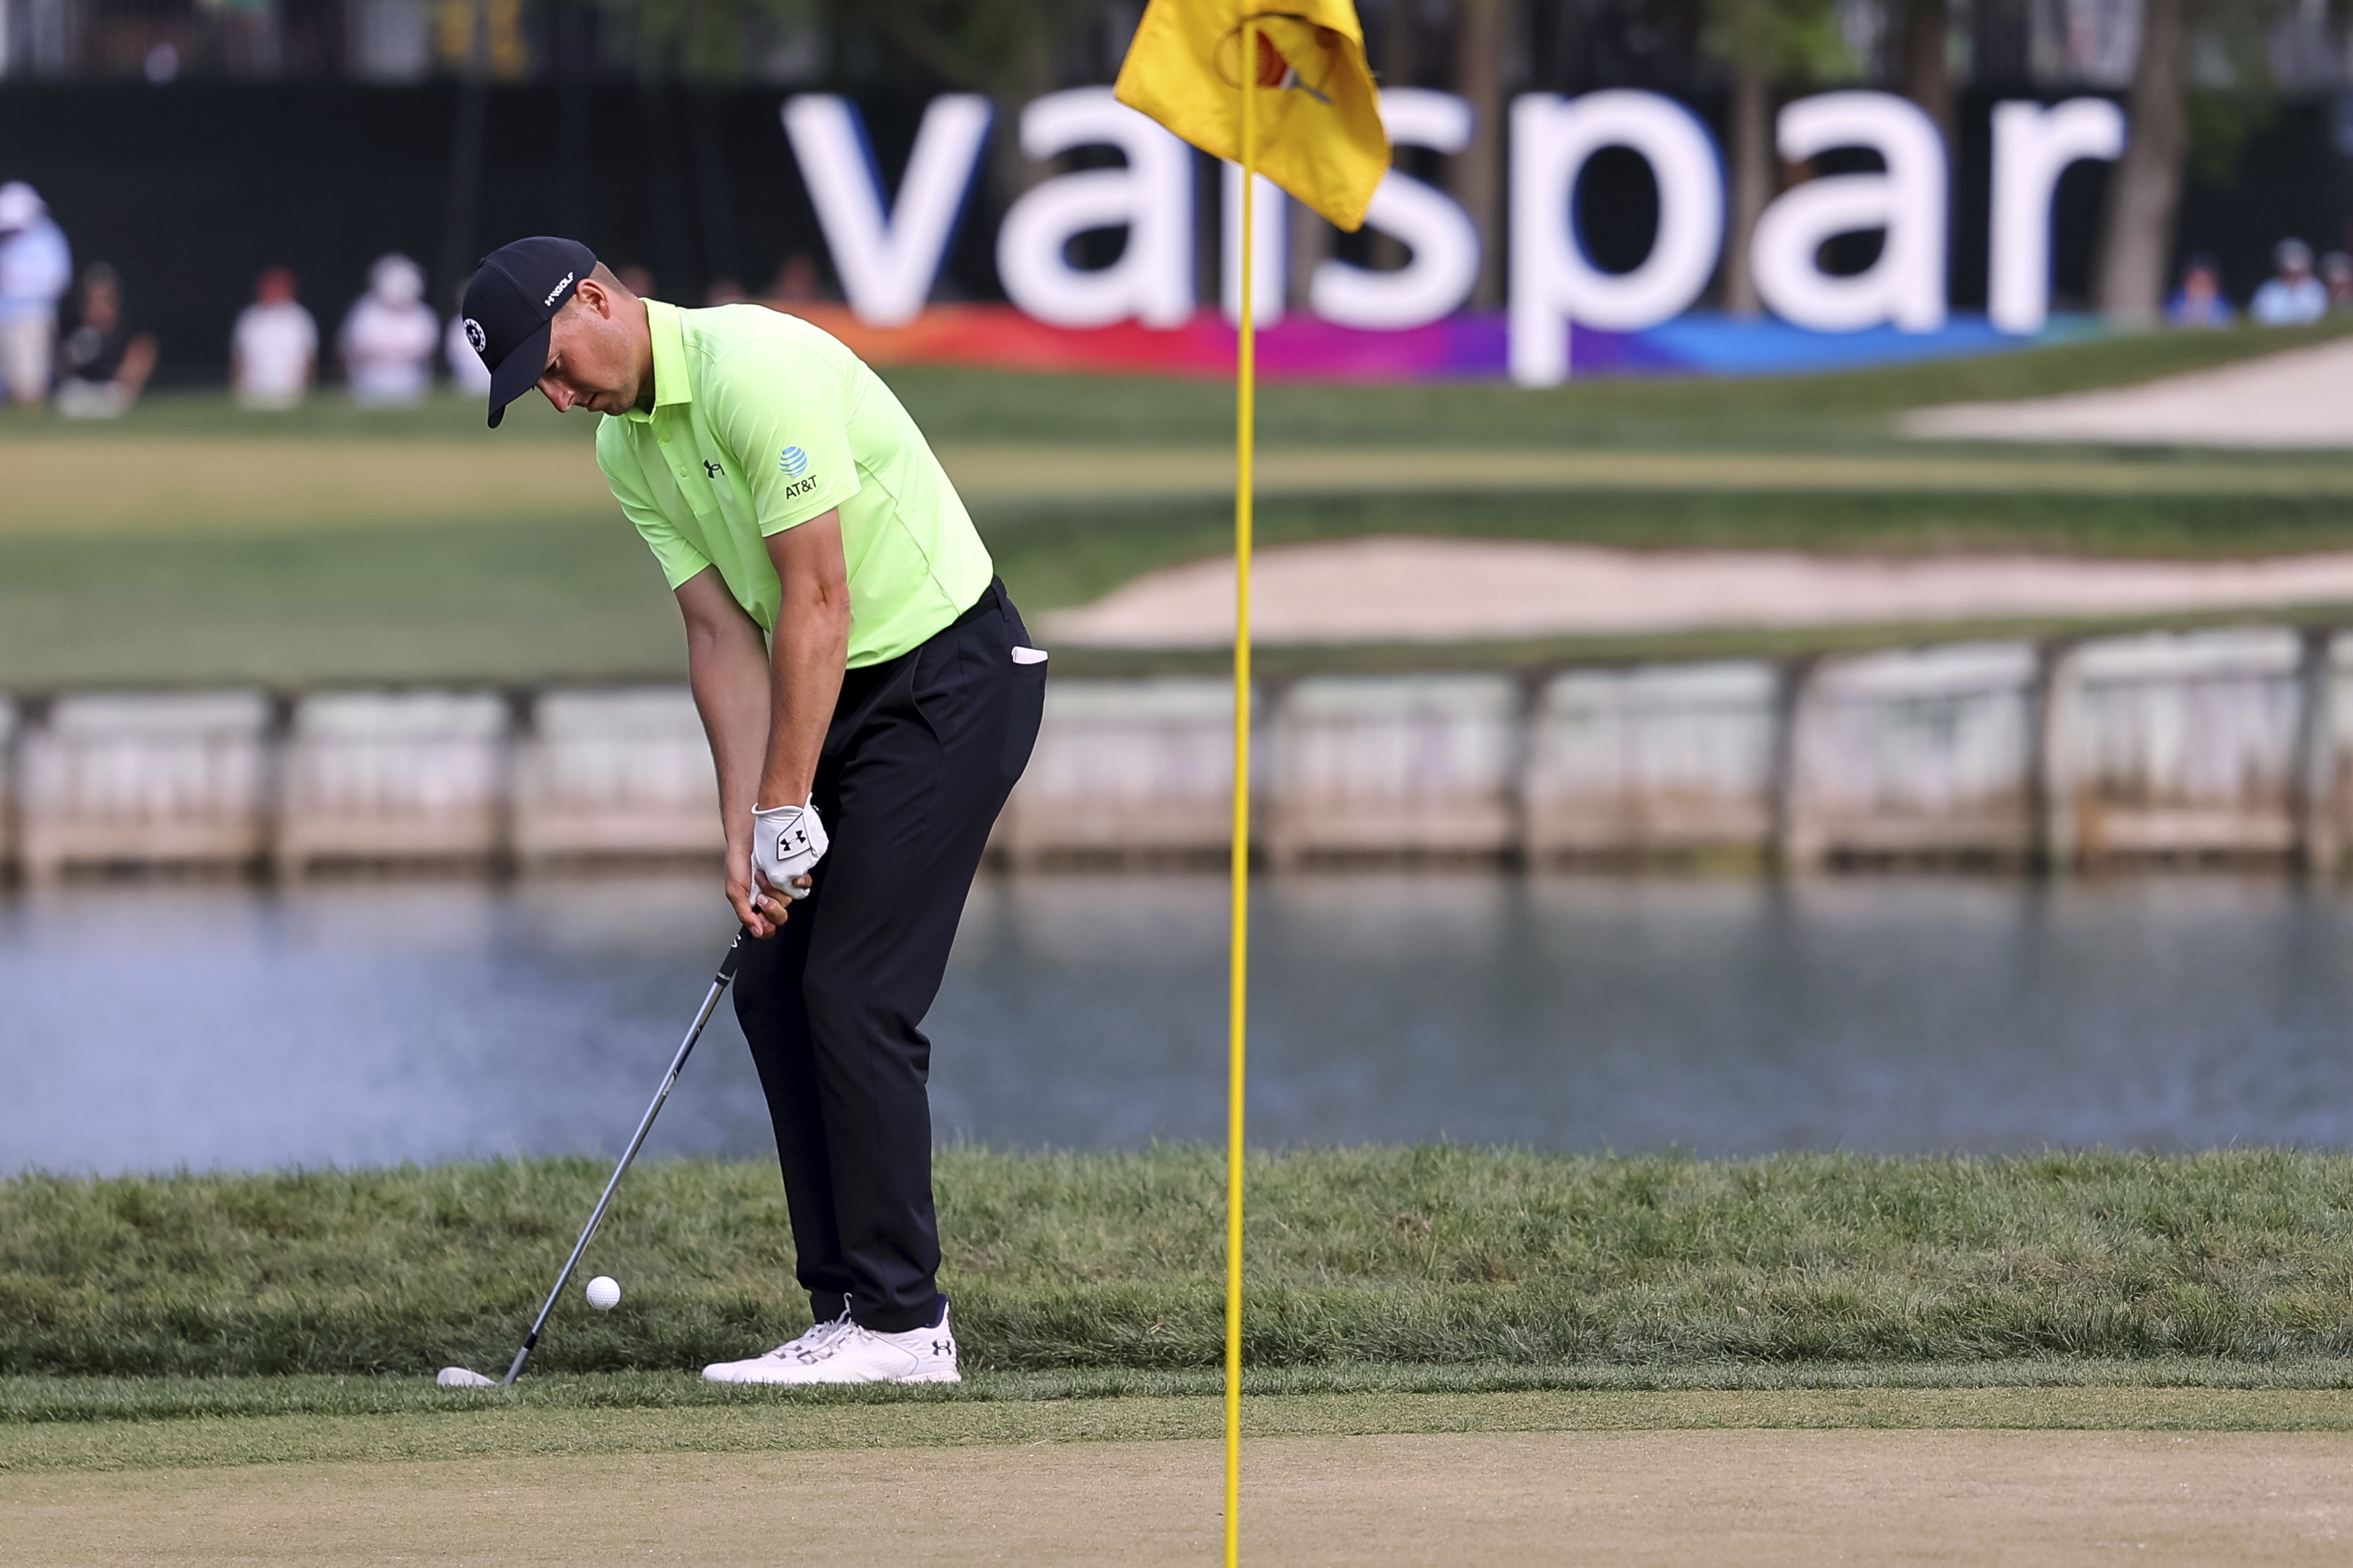 Jordan Spieth among trio of golfers with Dallas ties high up Valspar leaderboard